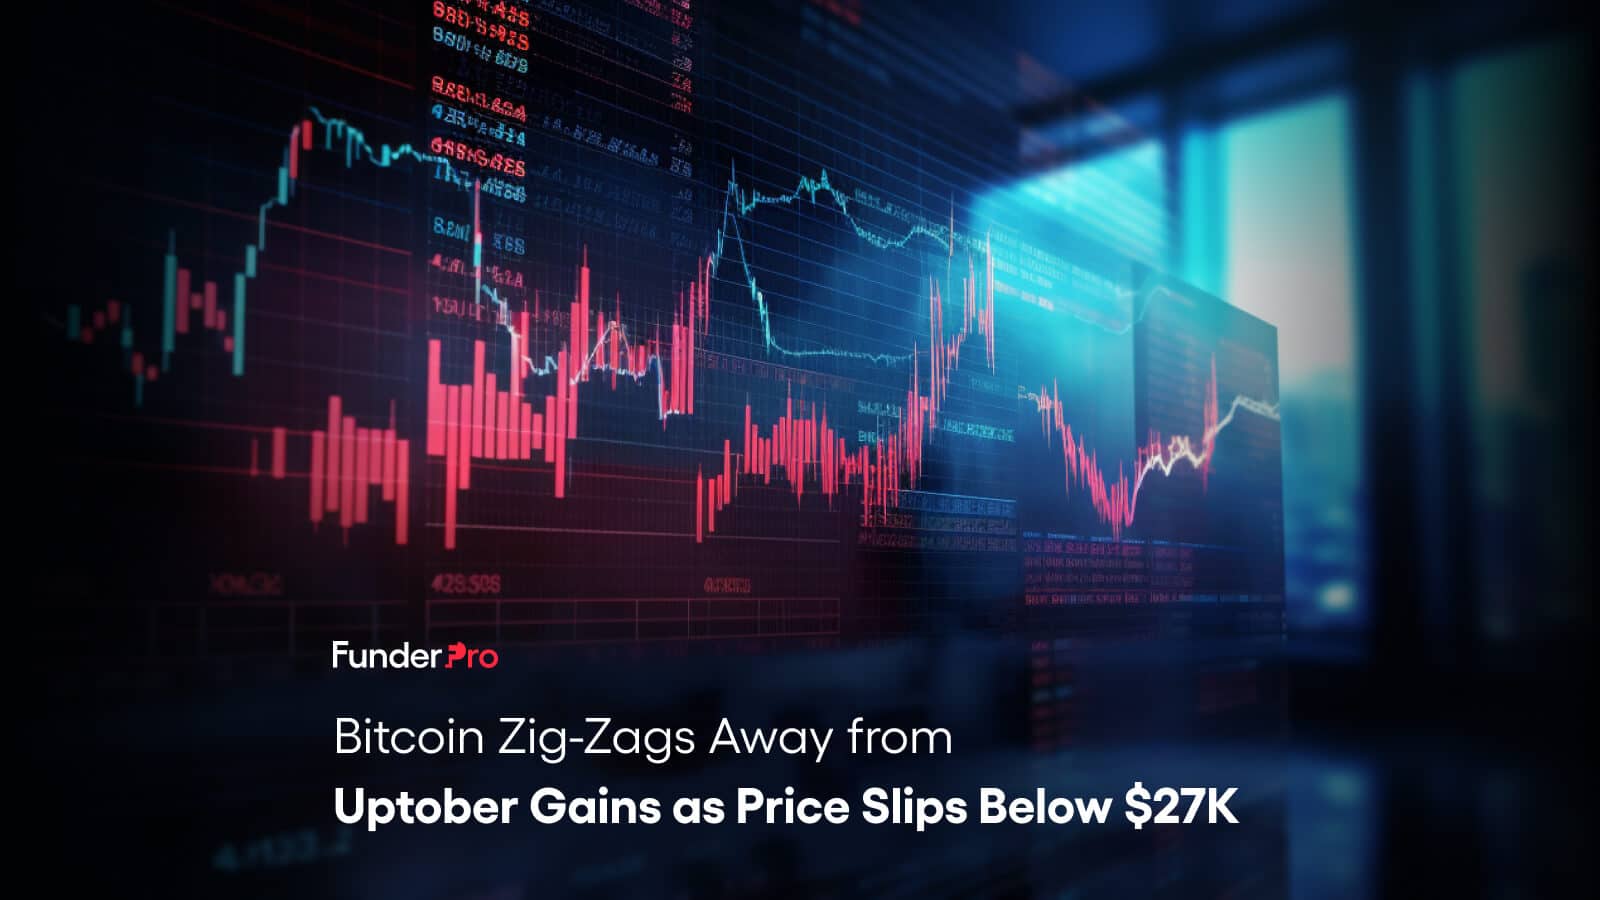 Bitcoin Zig-Zags Away from Uptober Gains as Price Slips Below $27K